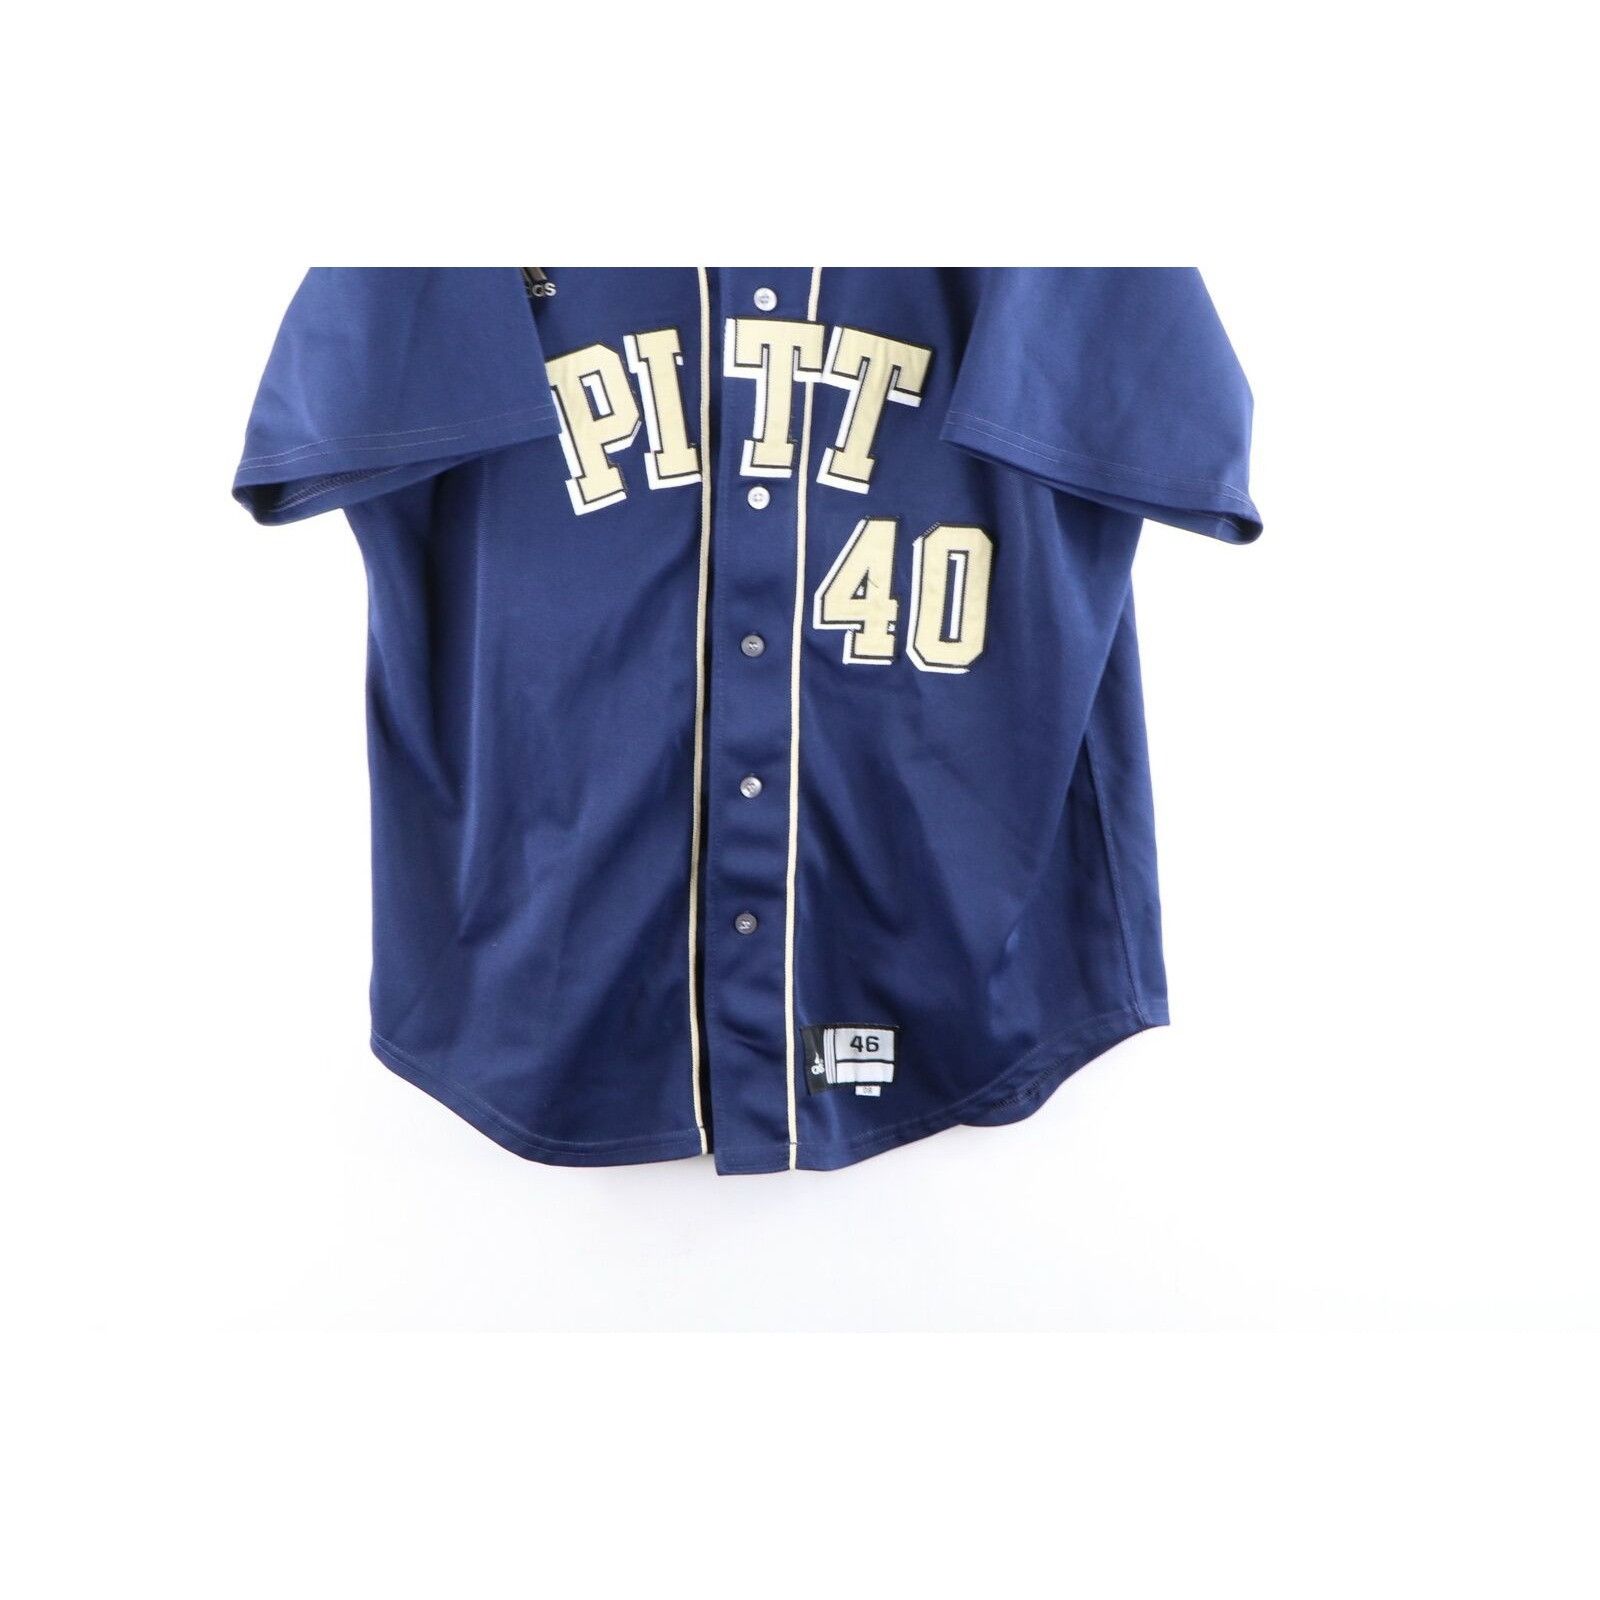 Adidas Adidas University of Pittsburgh Game Worn Baseball Jersey Size US S / EU 44-46 / 1 - 3 Thumbnail